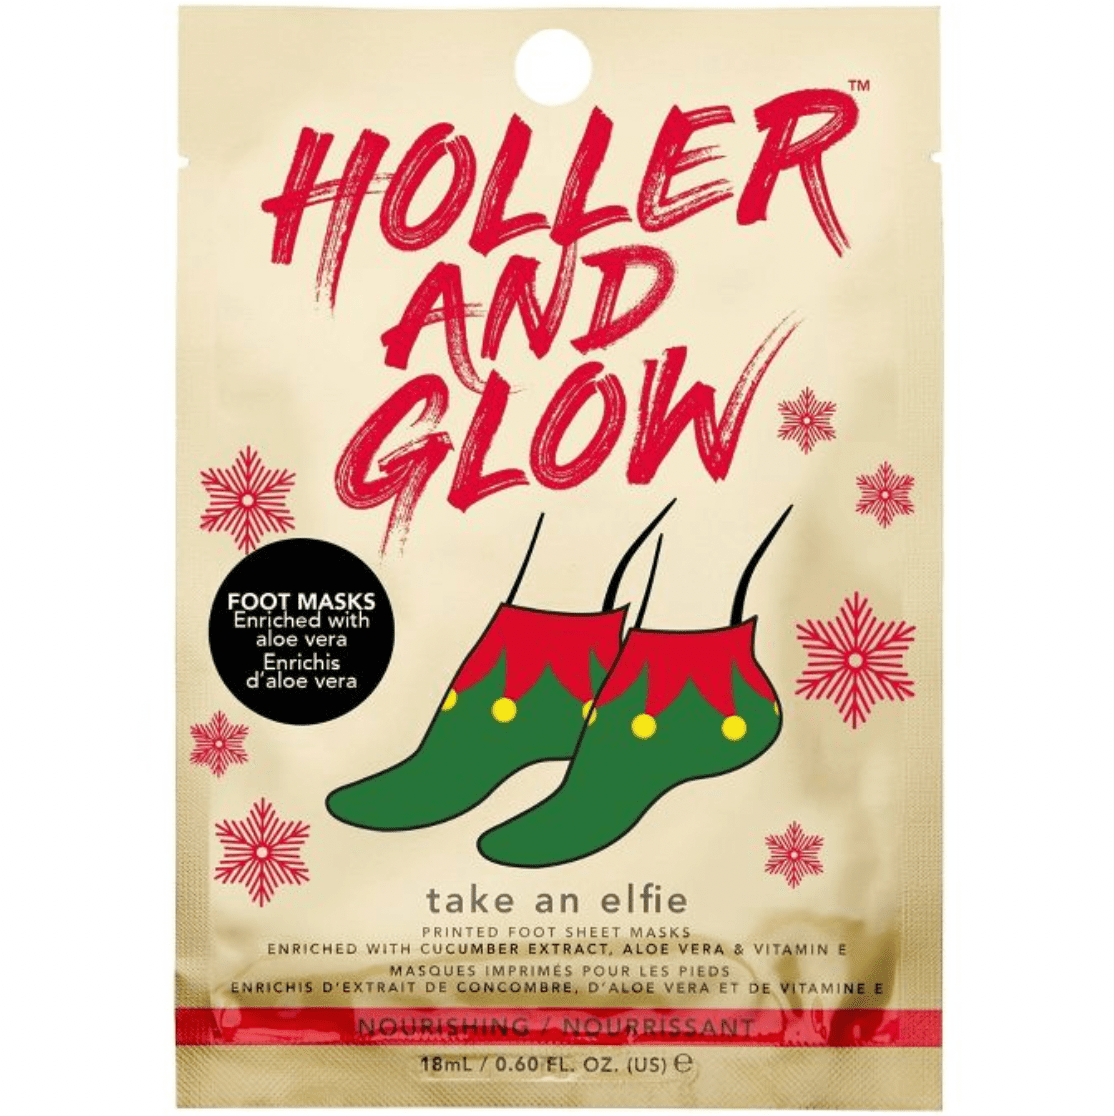 Holler and Glow Take an Elfie Foot Masks